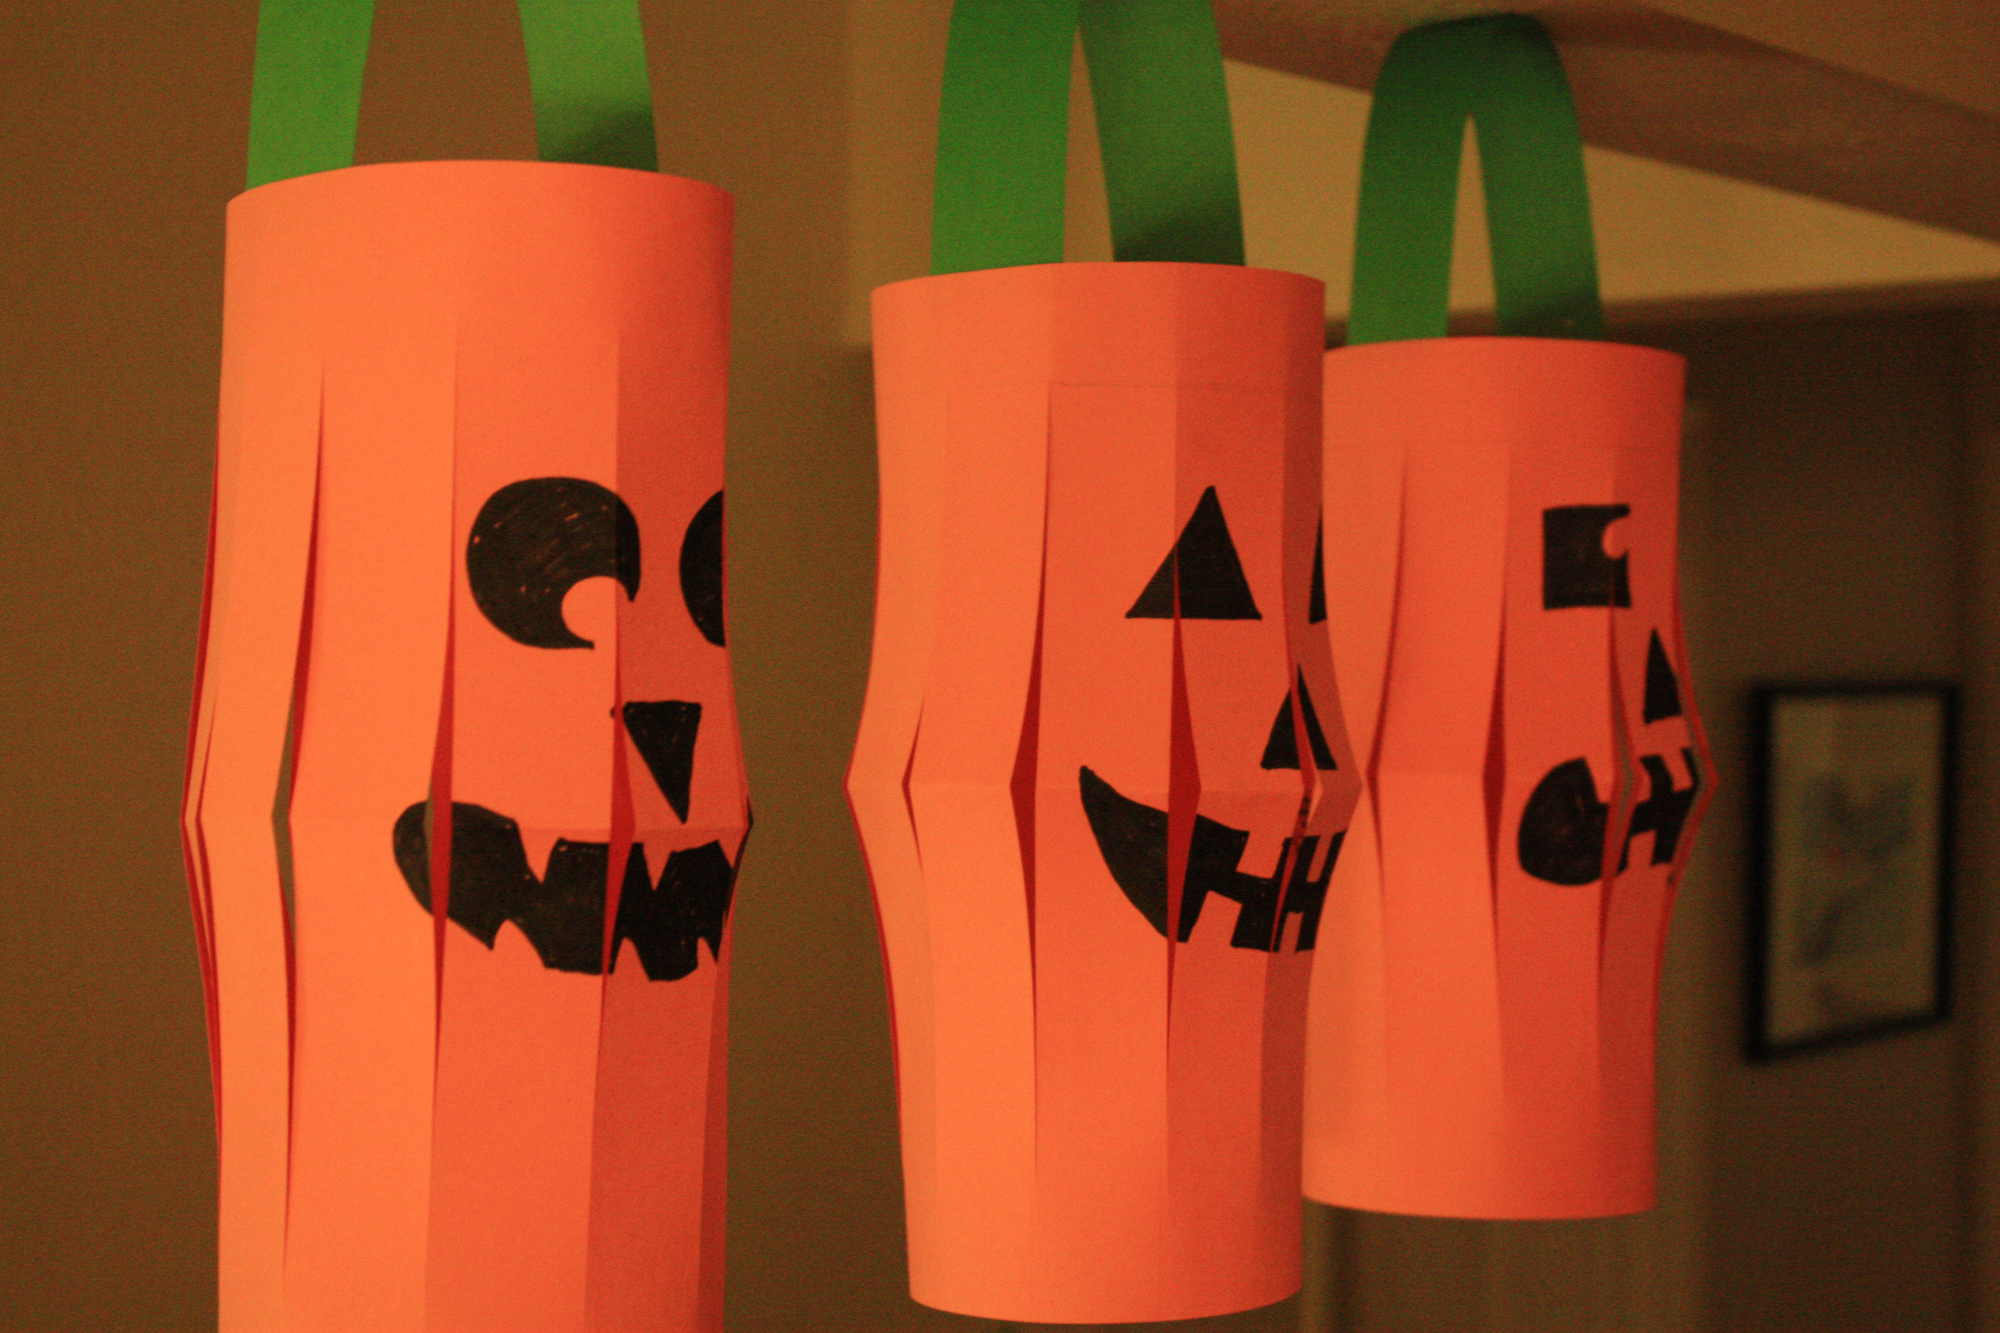 Paper Lanterns, Kids' Crafts, Fun Craft Ideas